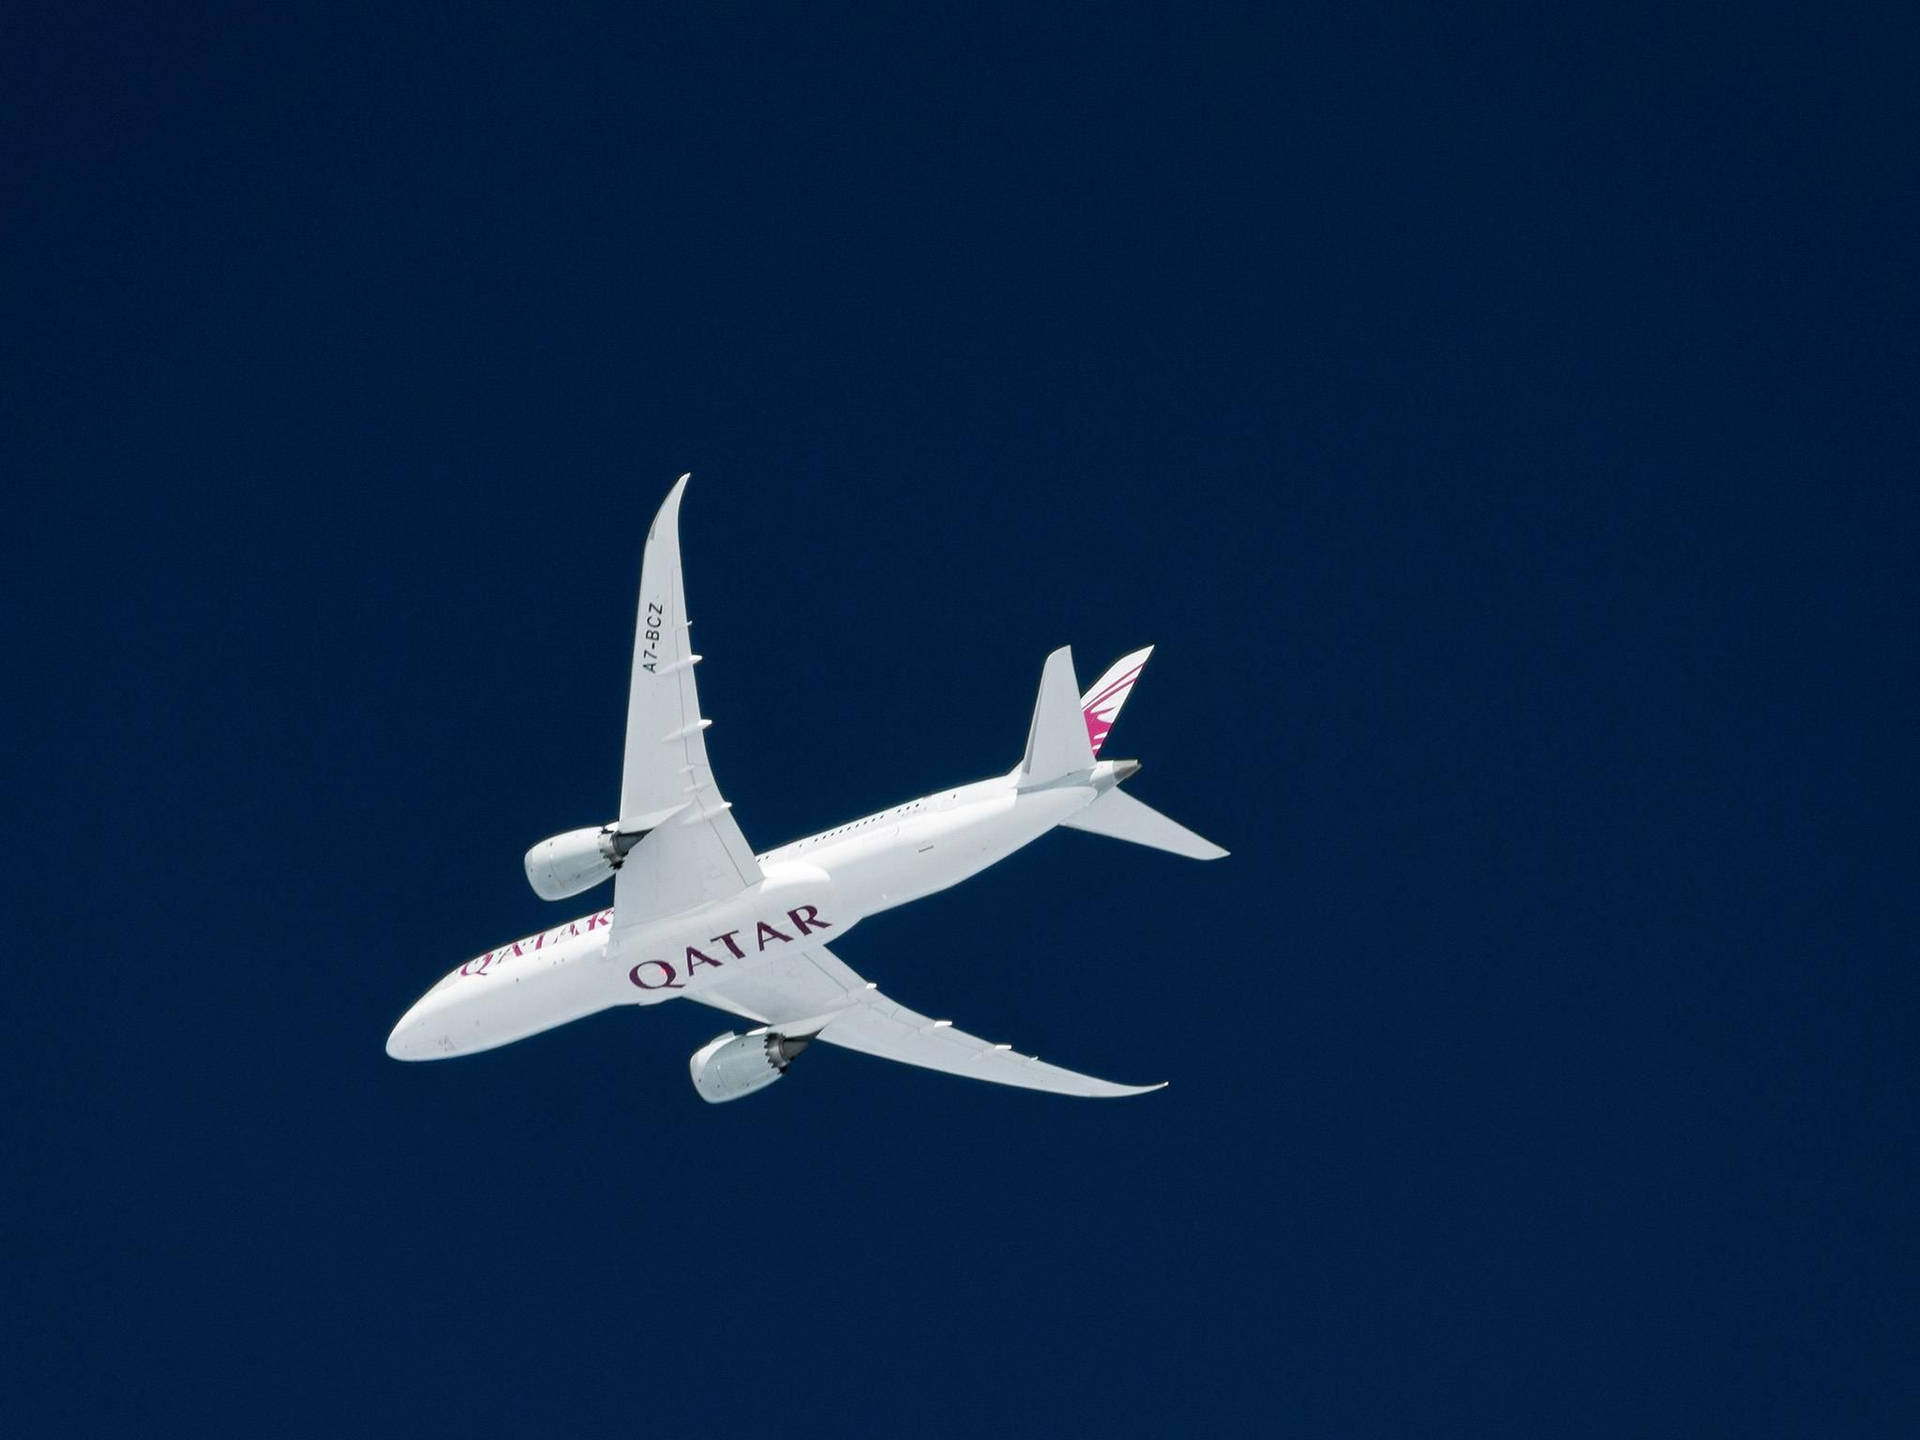 Maestosoaereo Qatar Airways In Volo Completo Sfondo